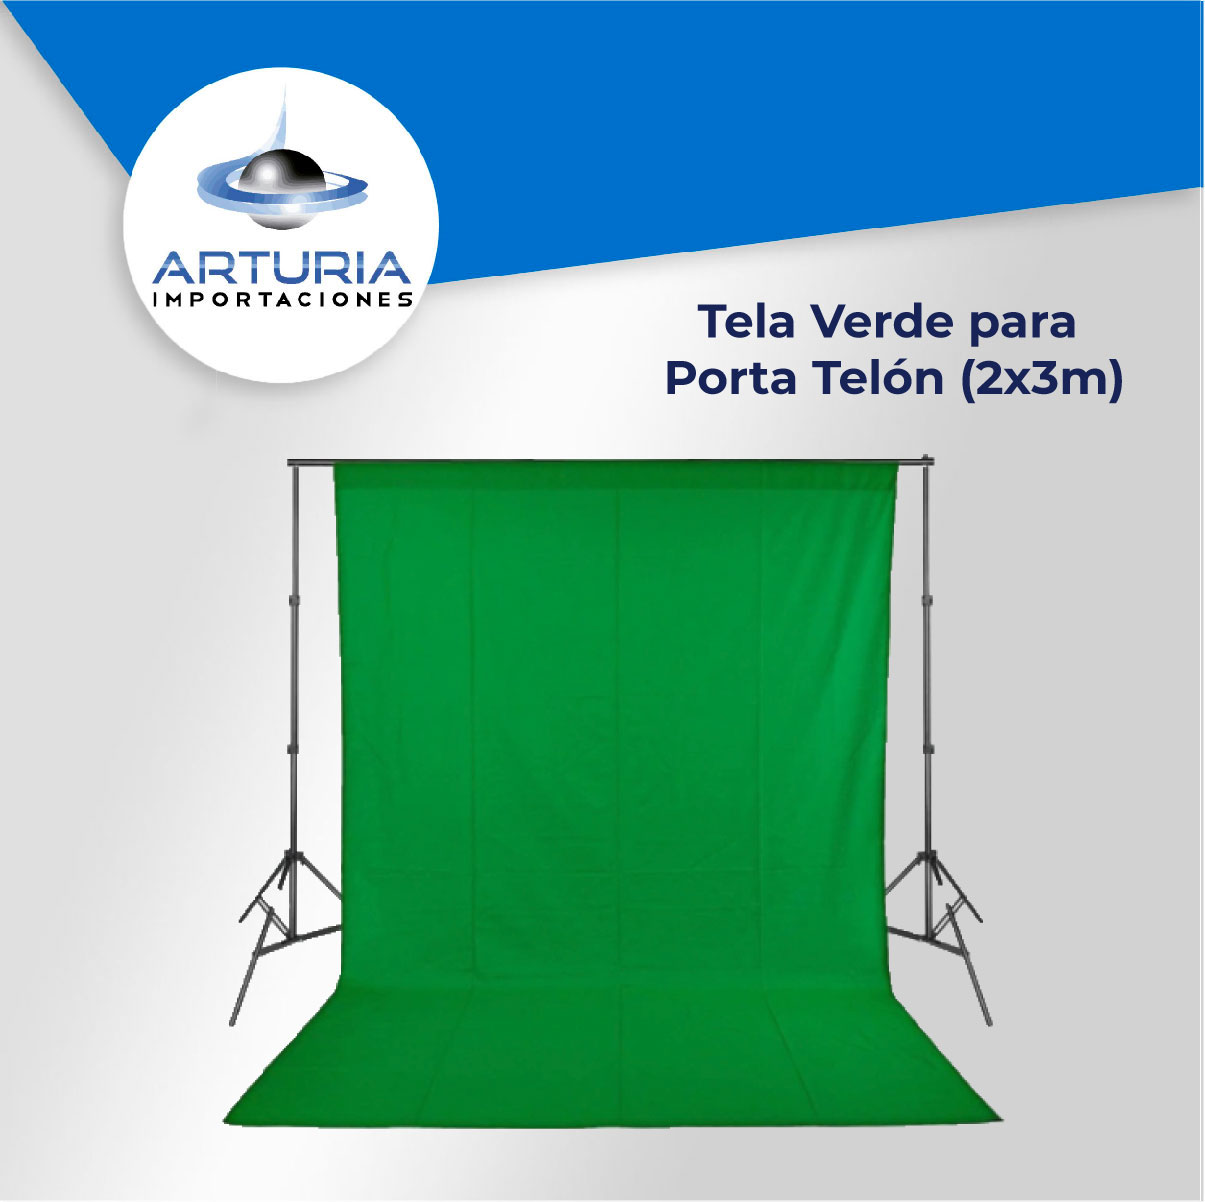 Tela Negra para Porta Telón (2x3m) - Importaciones Arturia